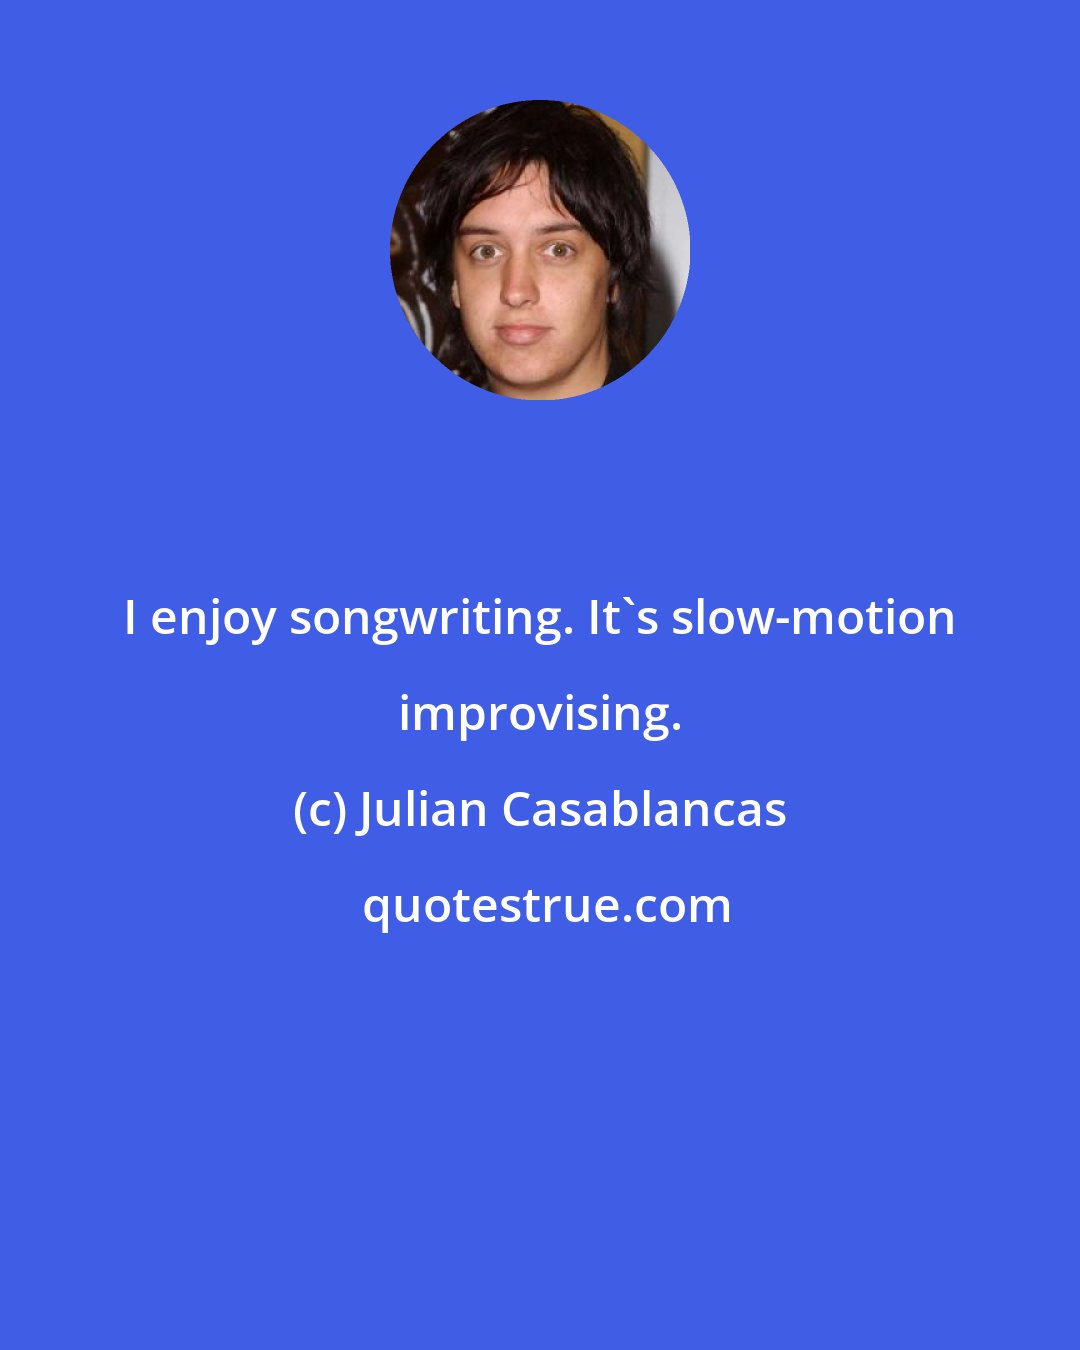 Julian Casablancas: I enjoy songwriting. It's slow-motion improvising.